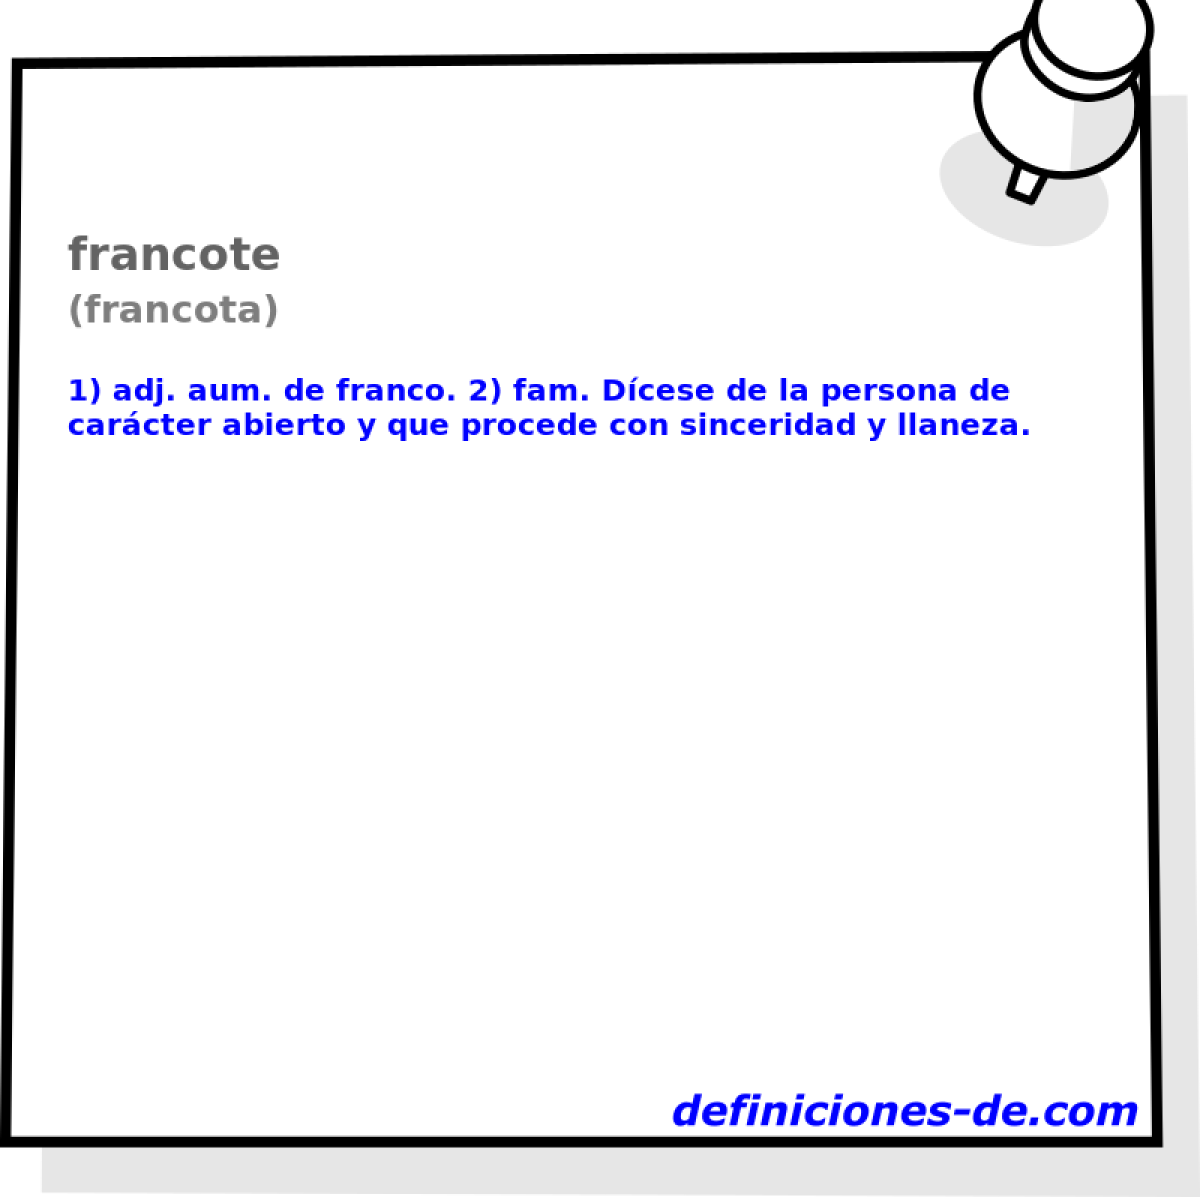 francote (francota)